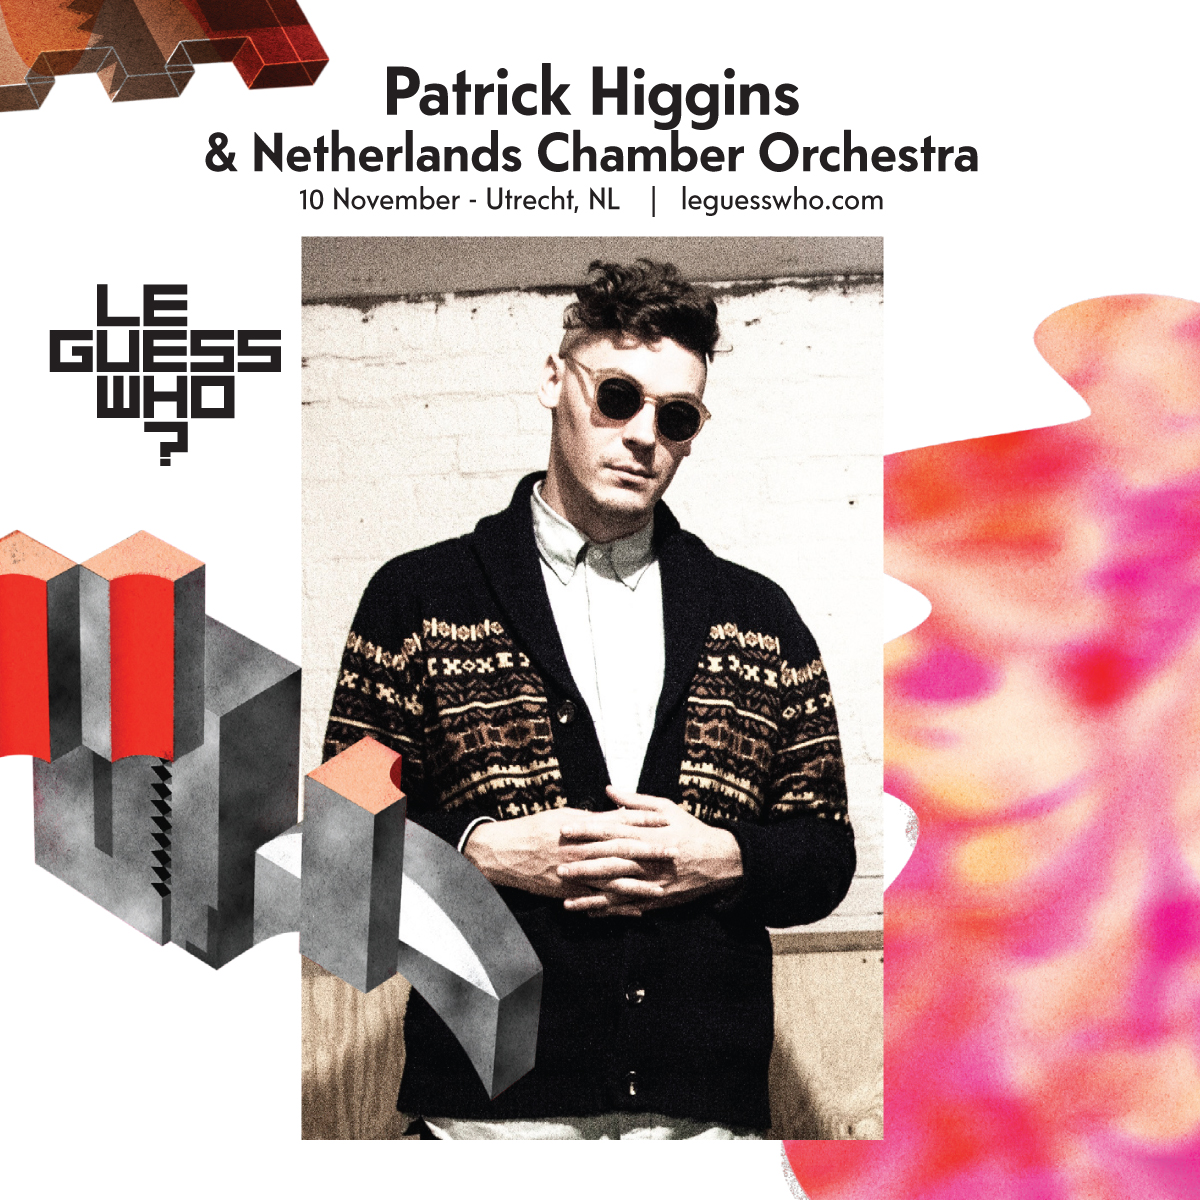 Meet avant-garde guitarist/composer Patrick Higgins, live with Netherlands Chamber Orchestra